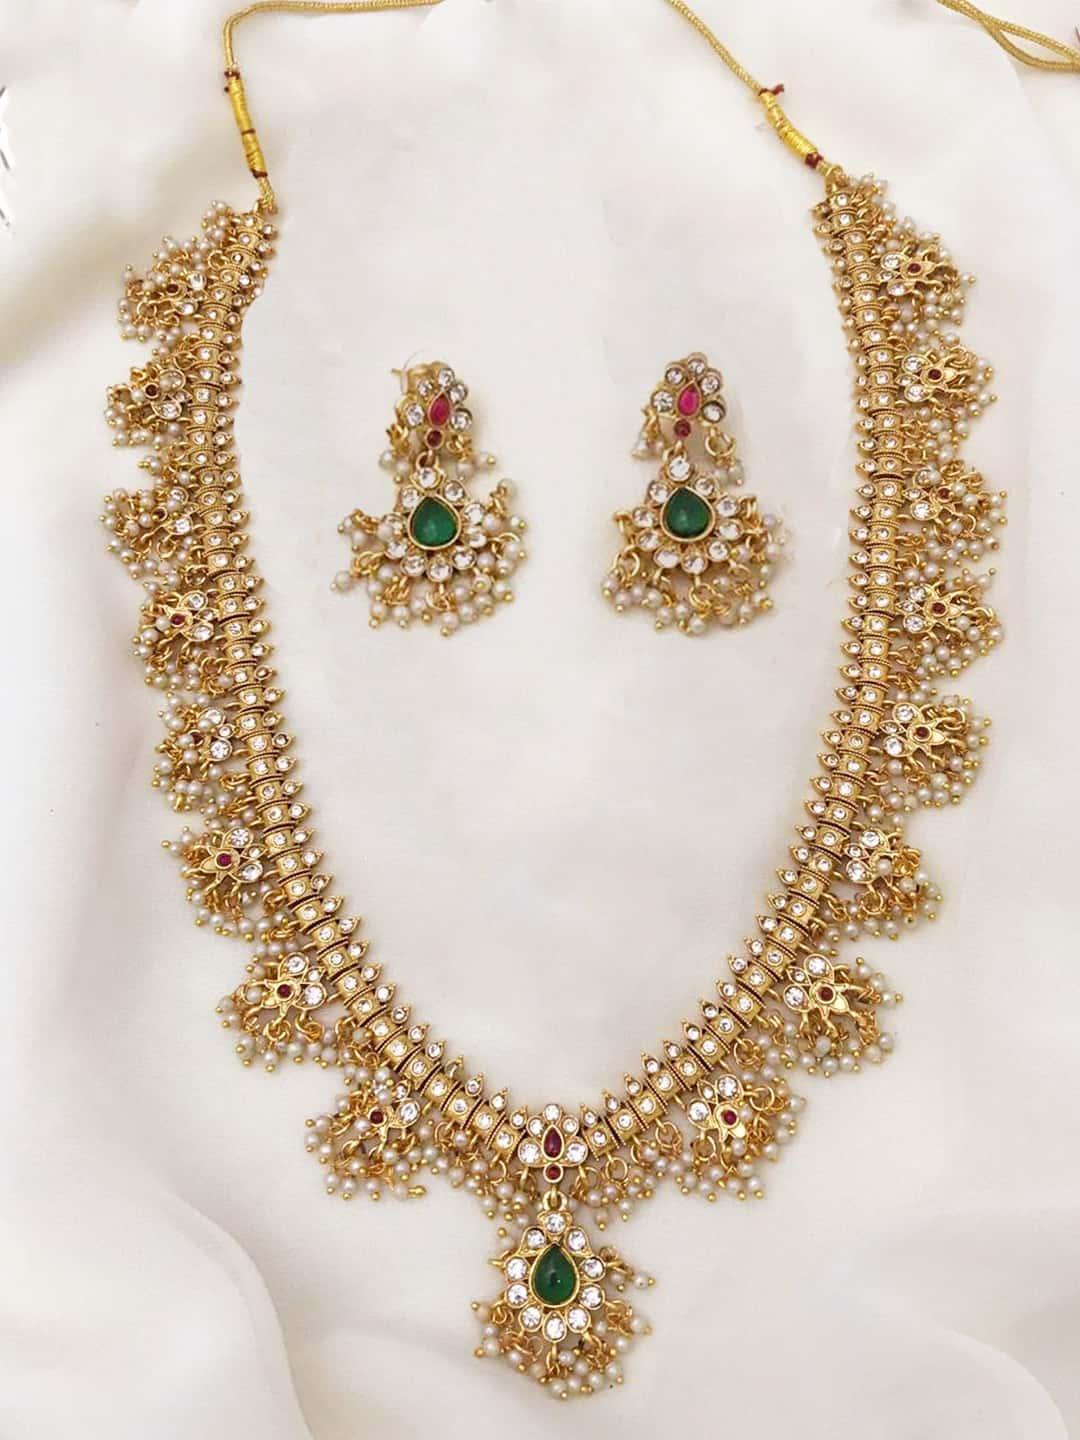 Ishhaara Single Layer Guttapusalu Haram Necklace With Earrings